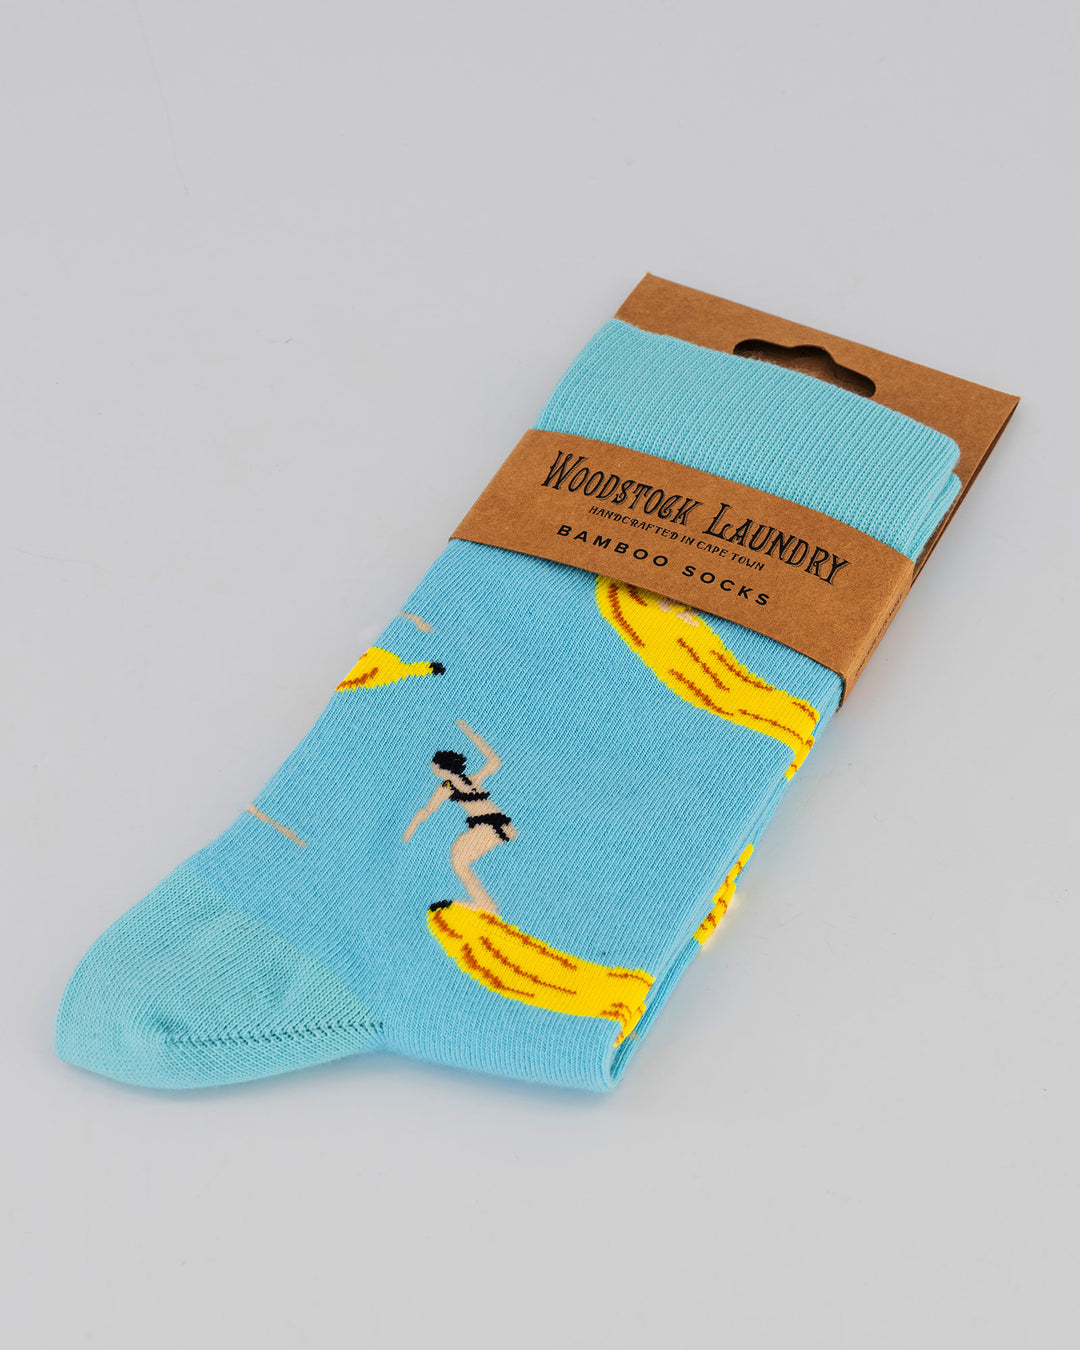 Socks Banana Boards Packaging - Woodstock Laundry